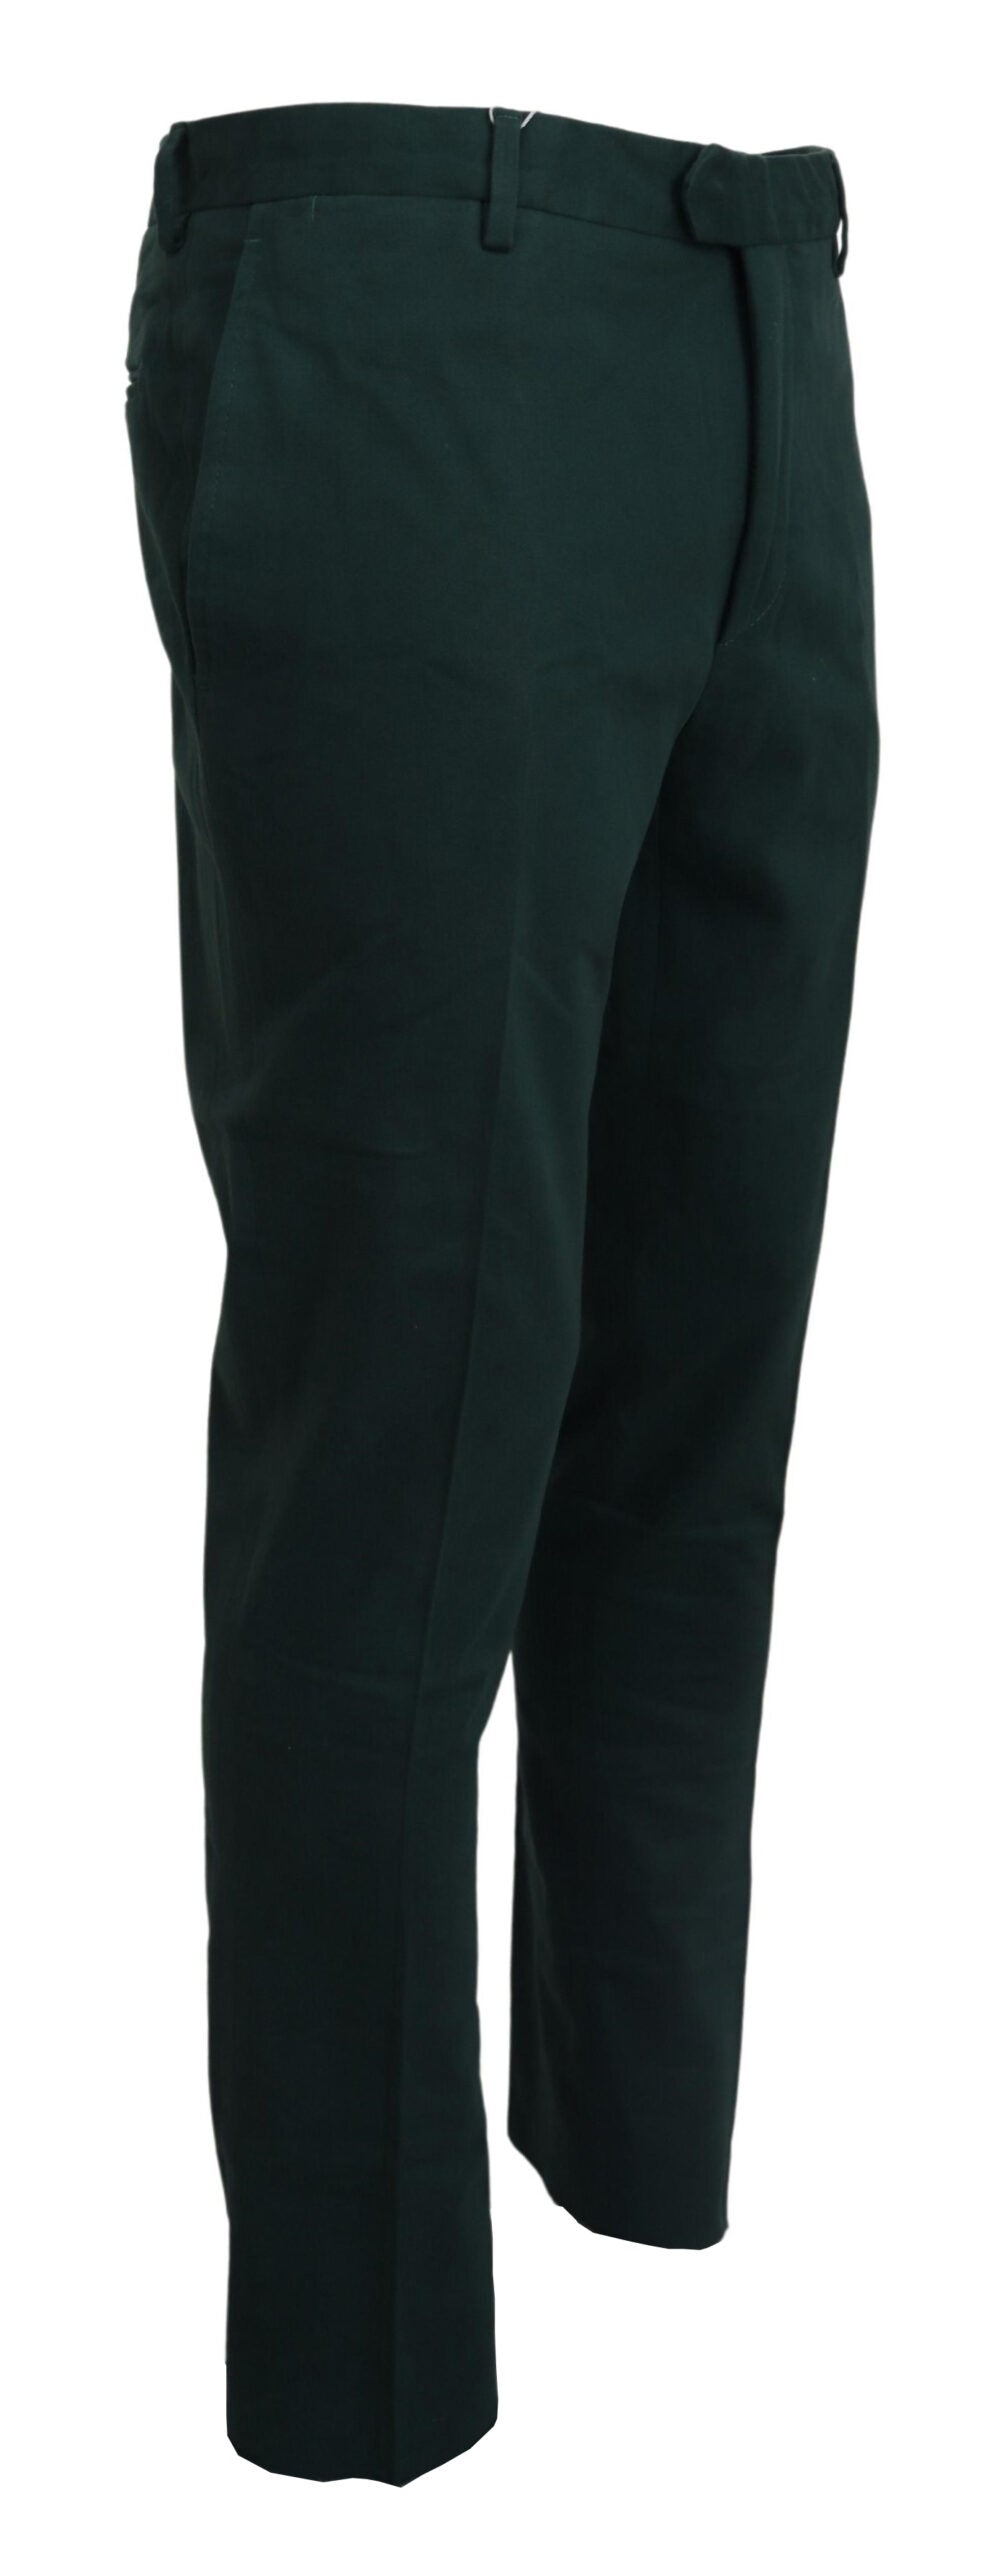 Buy Men Green Print Slim Fit Trousers Online - 726648 | Van Heusen